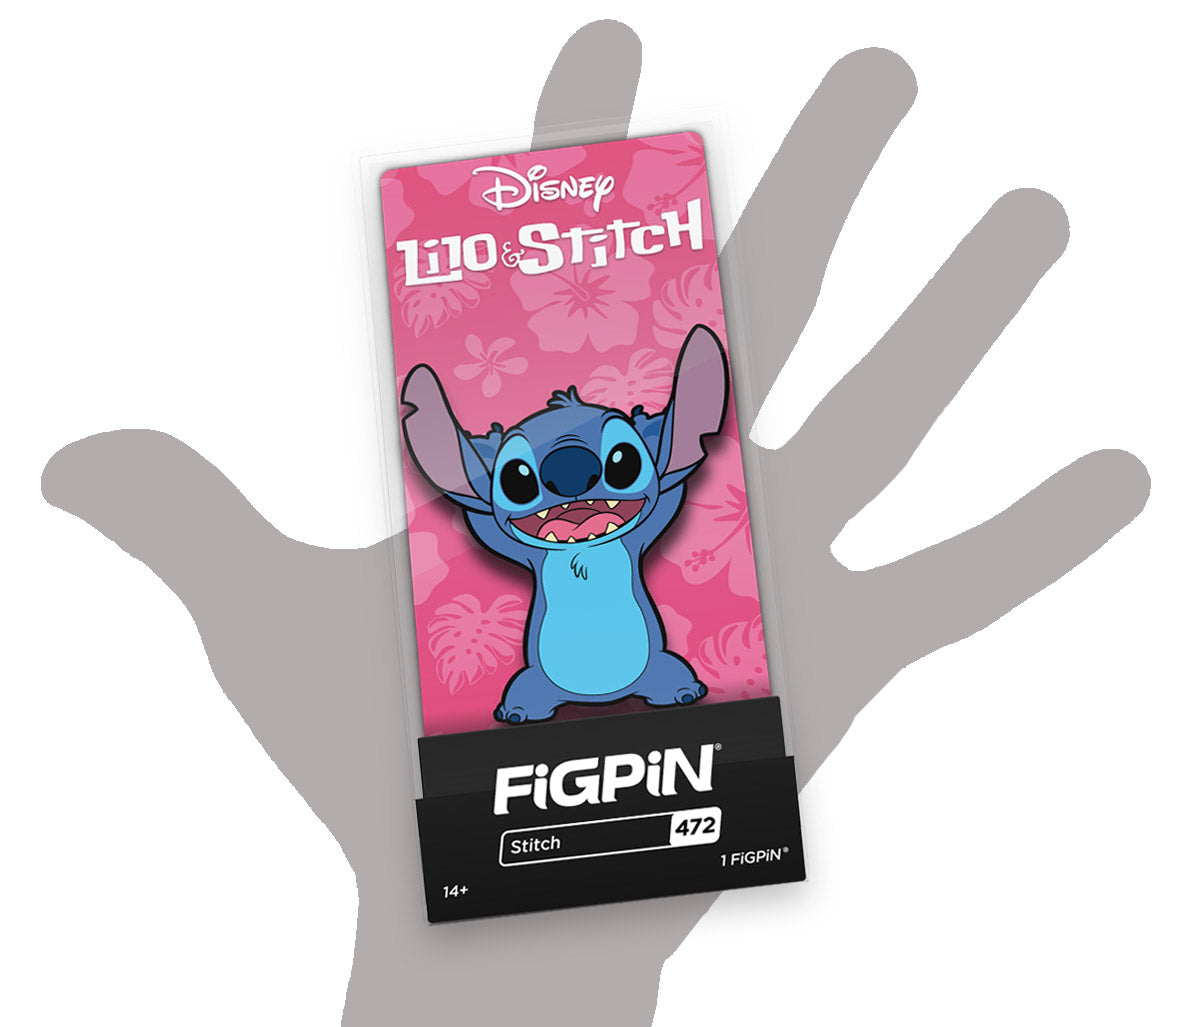 FiGPiN Stitch (472) Collectable Enamel Pin MKV8XSN8KH |27886|